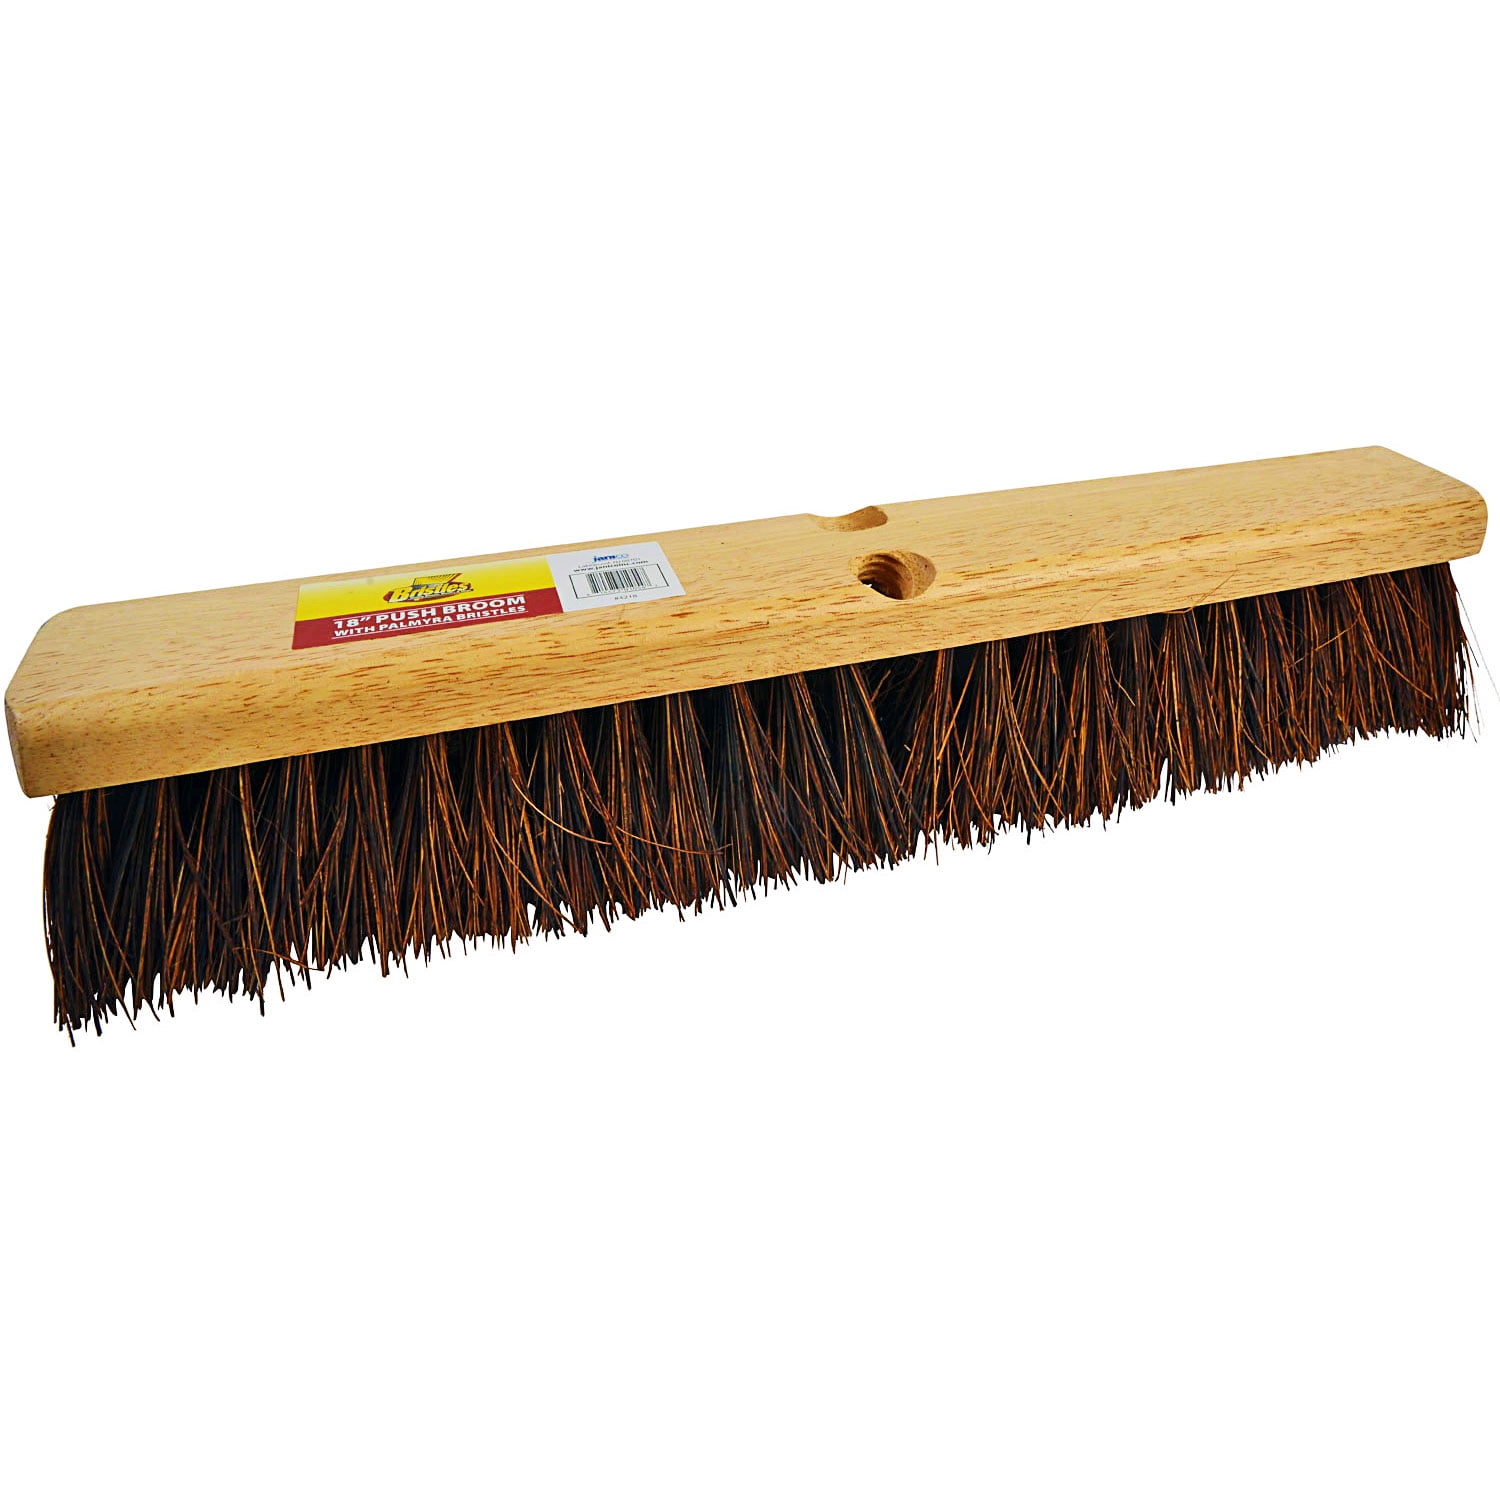 OXO Good Grips Lightweight Household Broom Head 1336580 - Broom Head Only